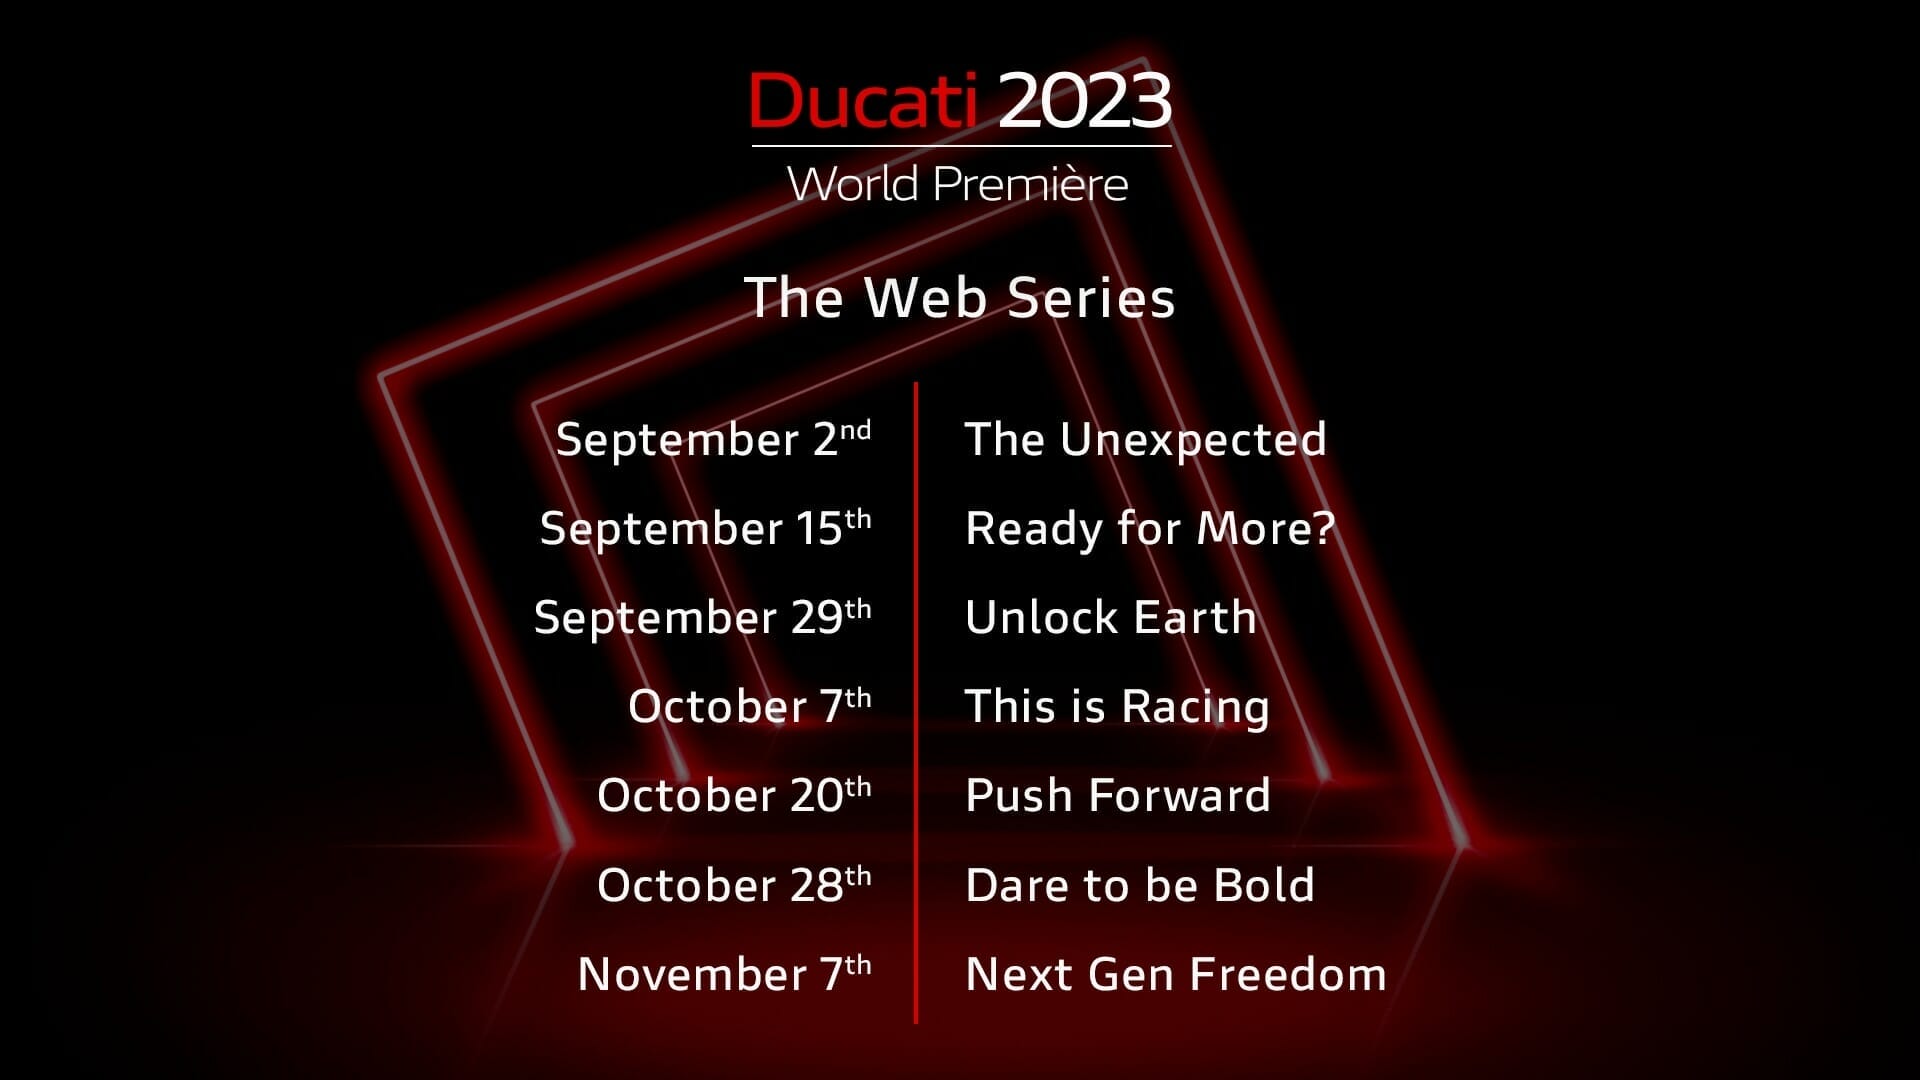 Ducati kündigt sieben Präsentationen an – Ducati World Premiere 2023 - MOTORCYCLES.NEWS